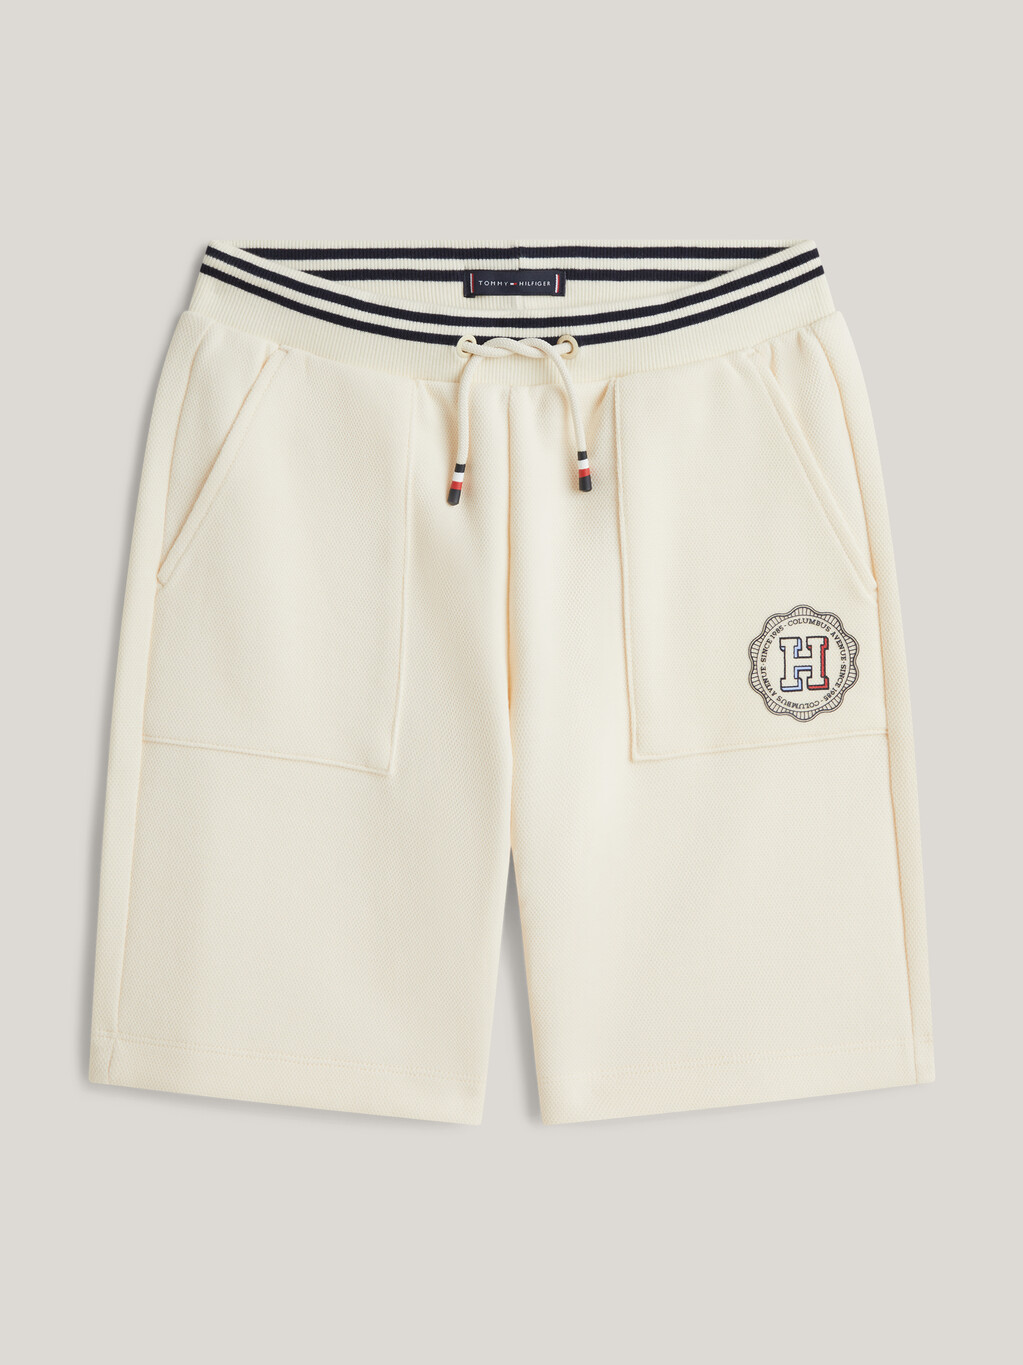 Hilfiger Monotype Archive Crest Logo運動短褲, Calico, hi-res